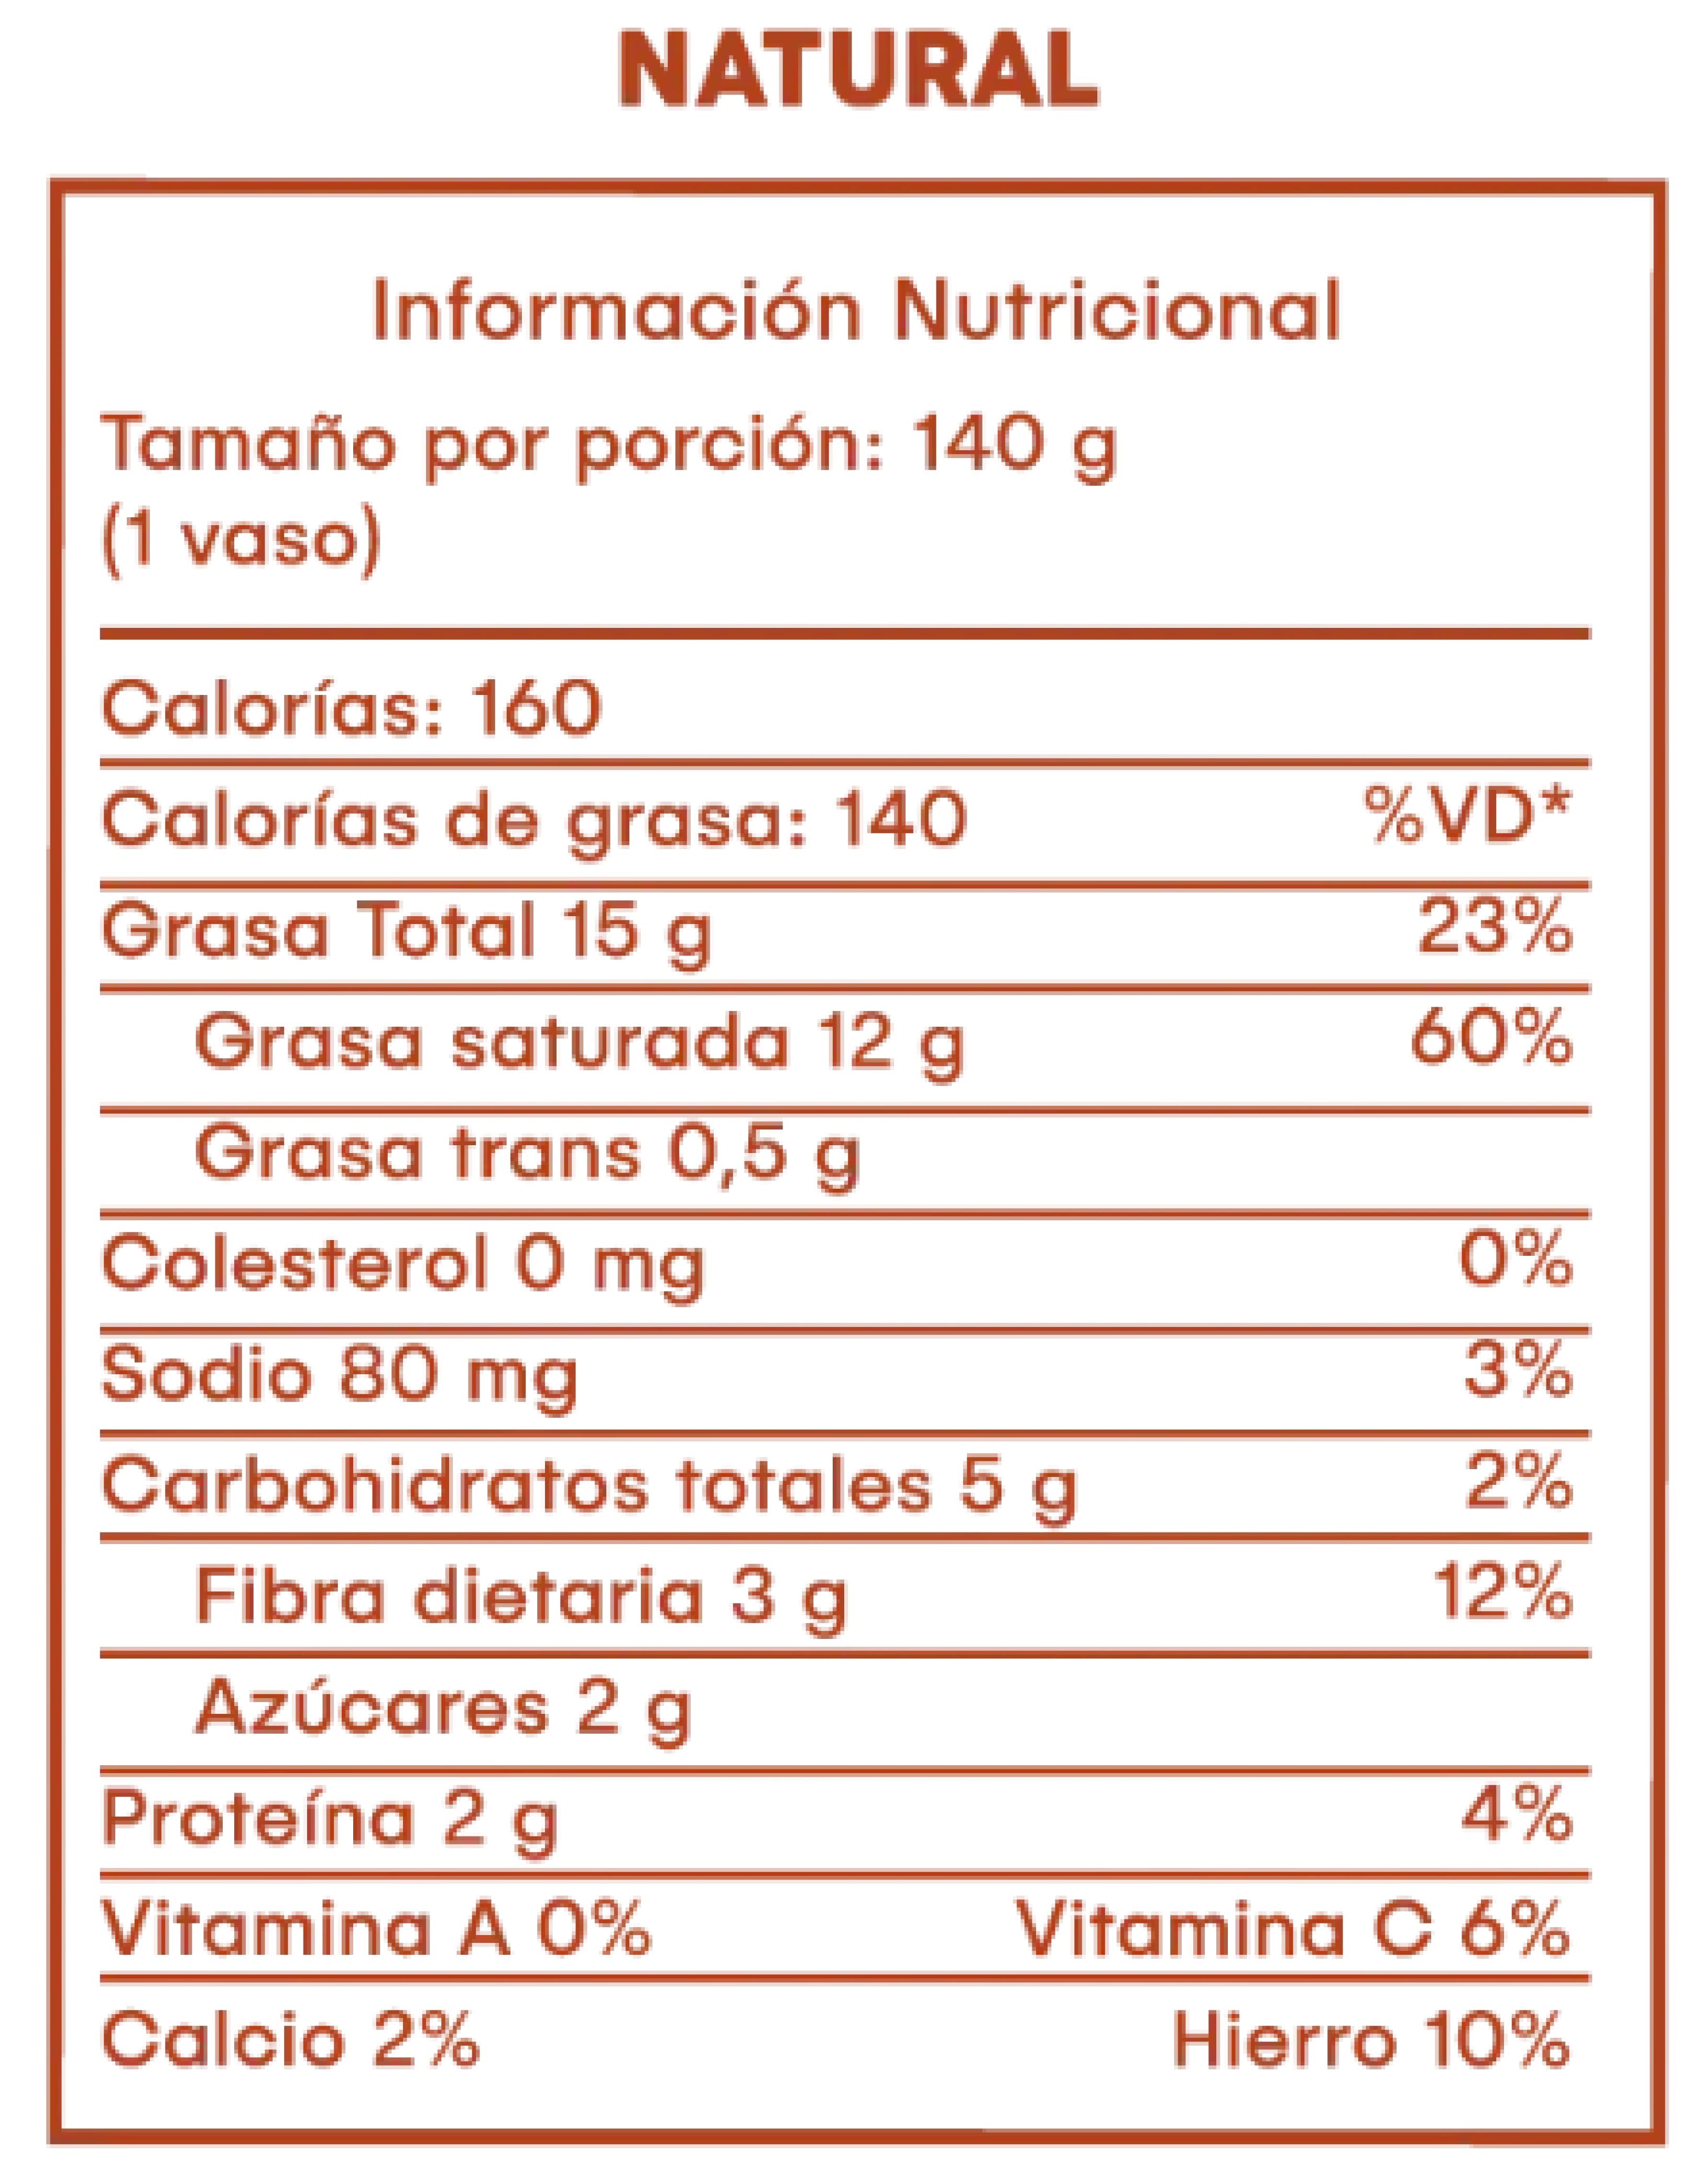 Yogurt 140gr (YOCOCO) Natural